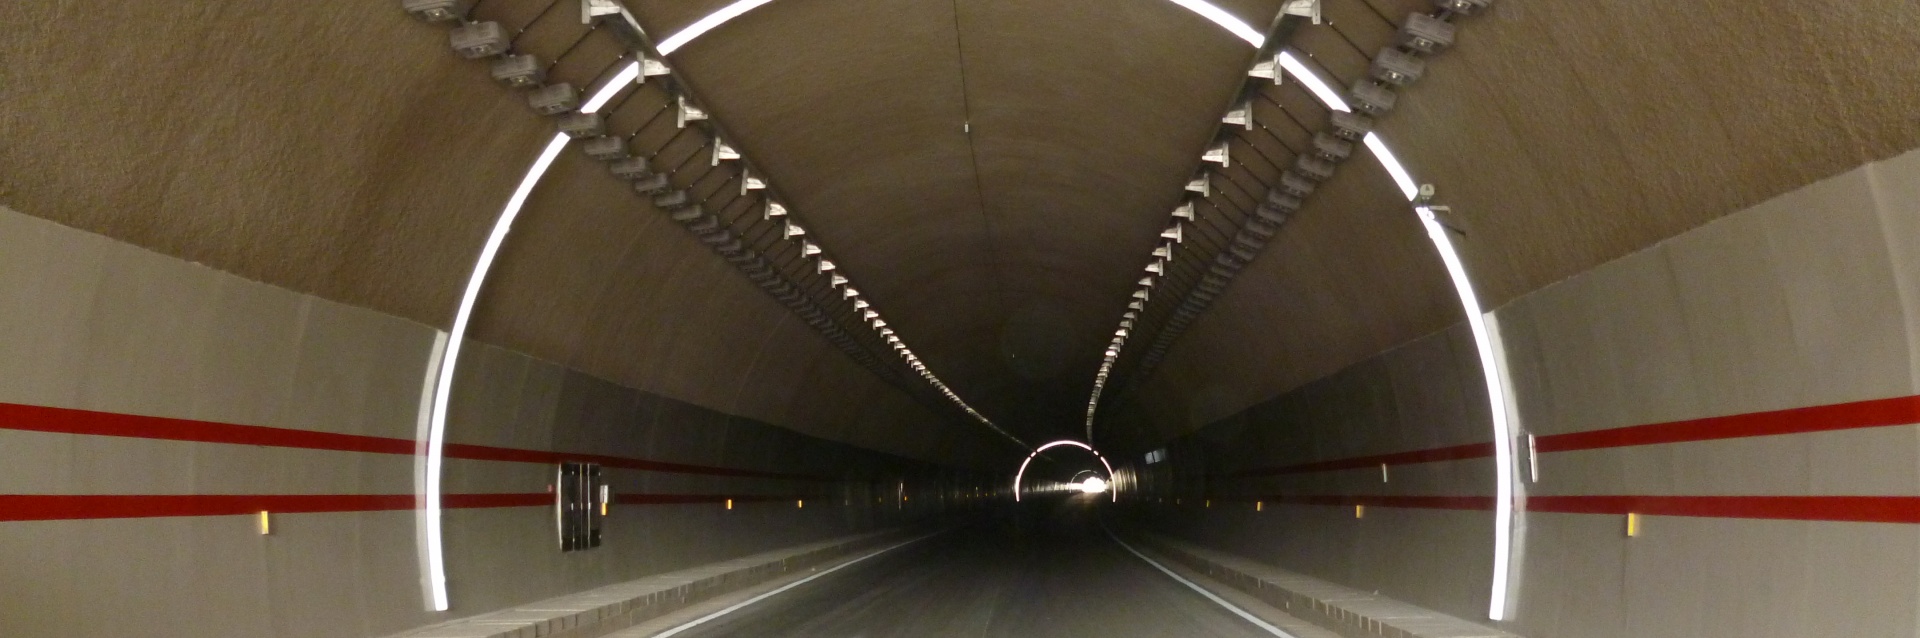 Tunnel in China Yunan